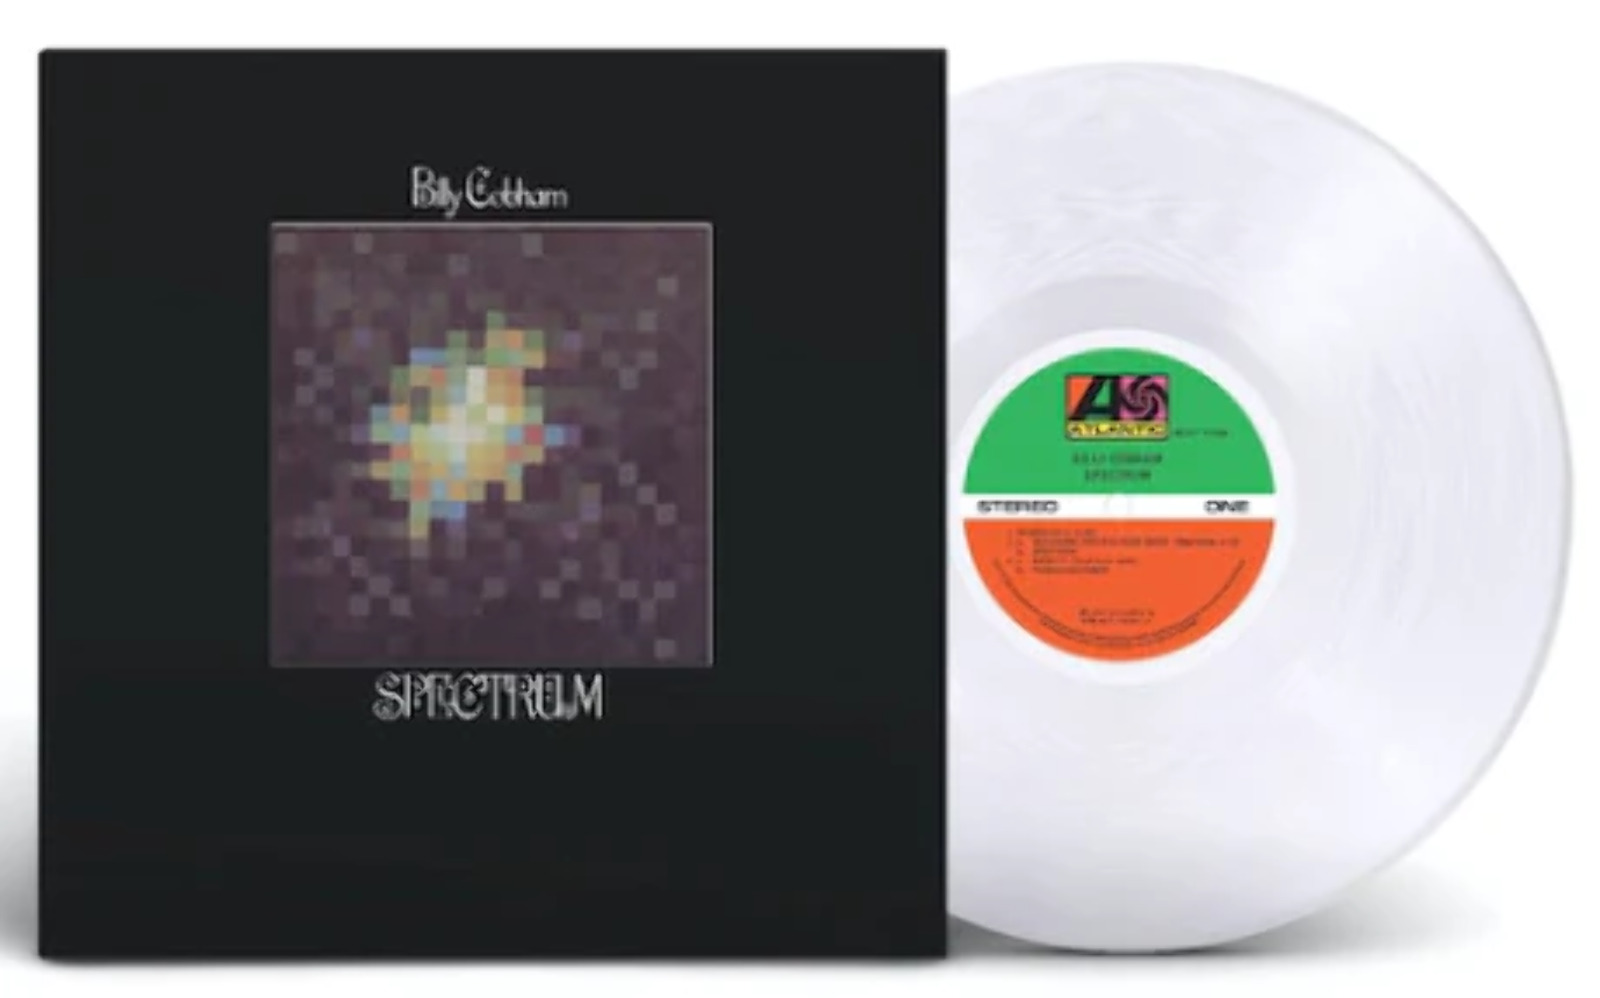 Billy Cobham - Spectrum [Clear Vinyl] NEW Sealed Vinyl LP Album